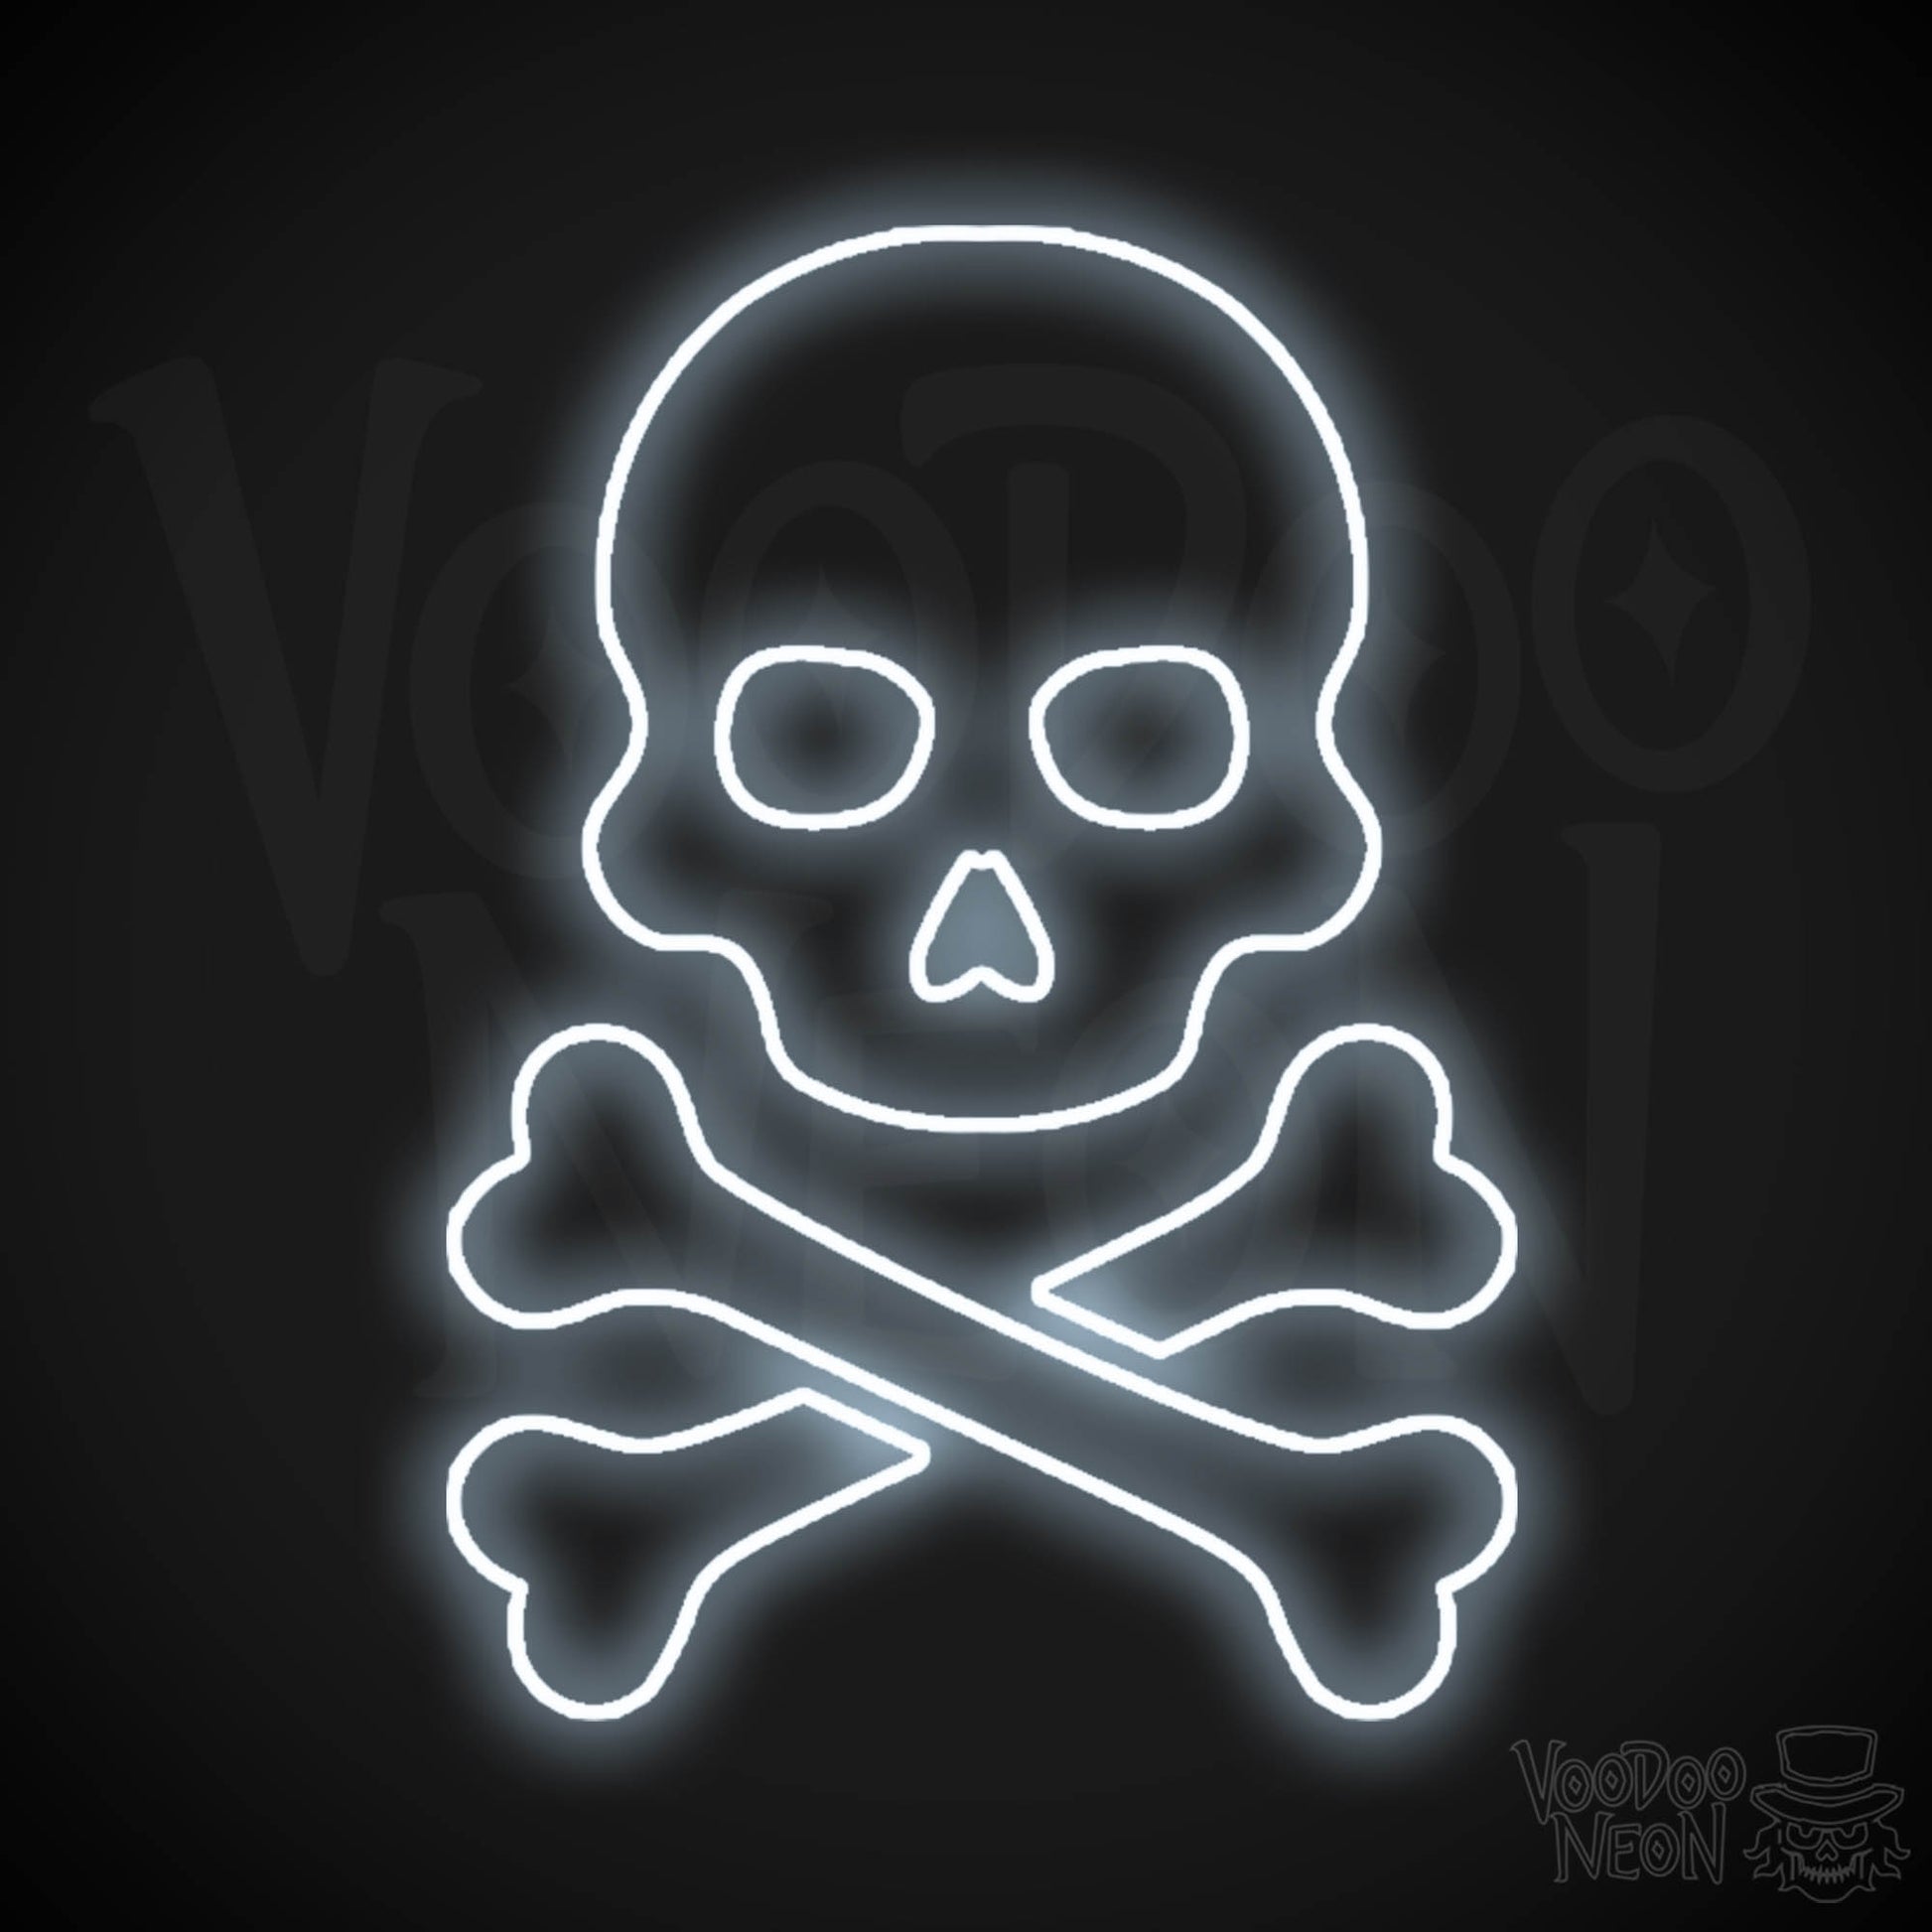 Pirate Skull & Crossbones Neon Sign - Neon Pirate Skull & Crossbones Sign - LED Lights - Color Cool White